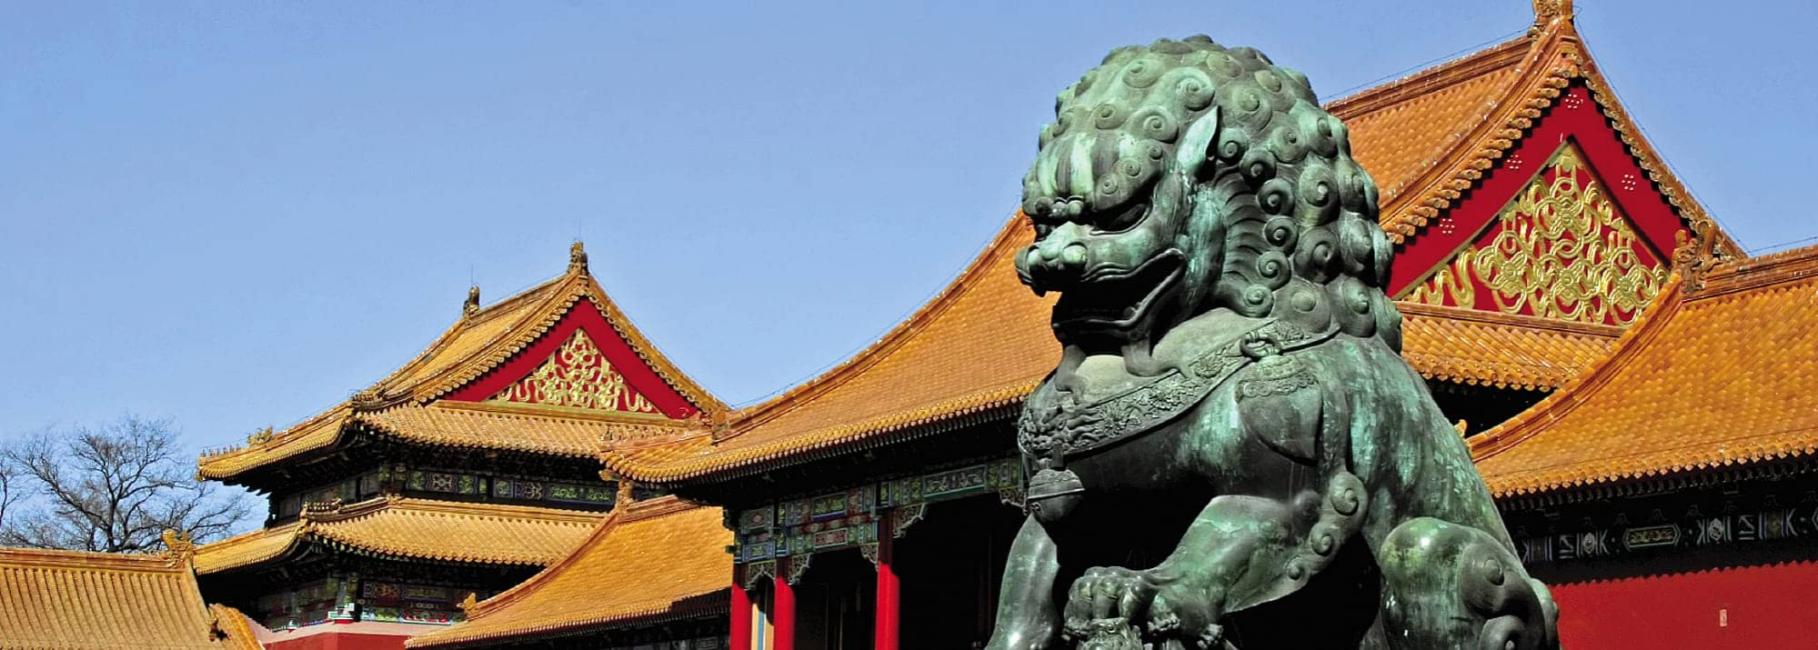 china beijing history trip header nst